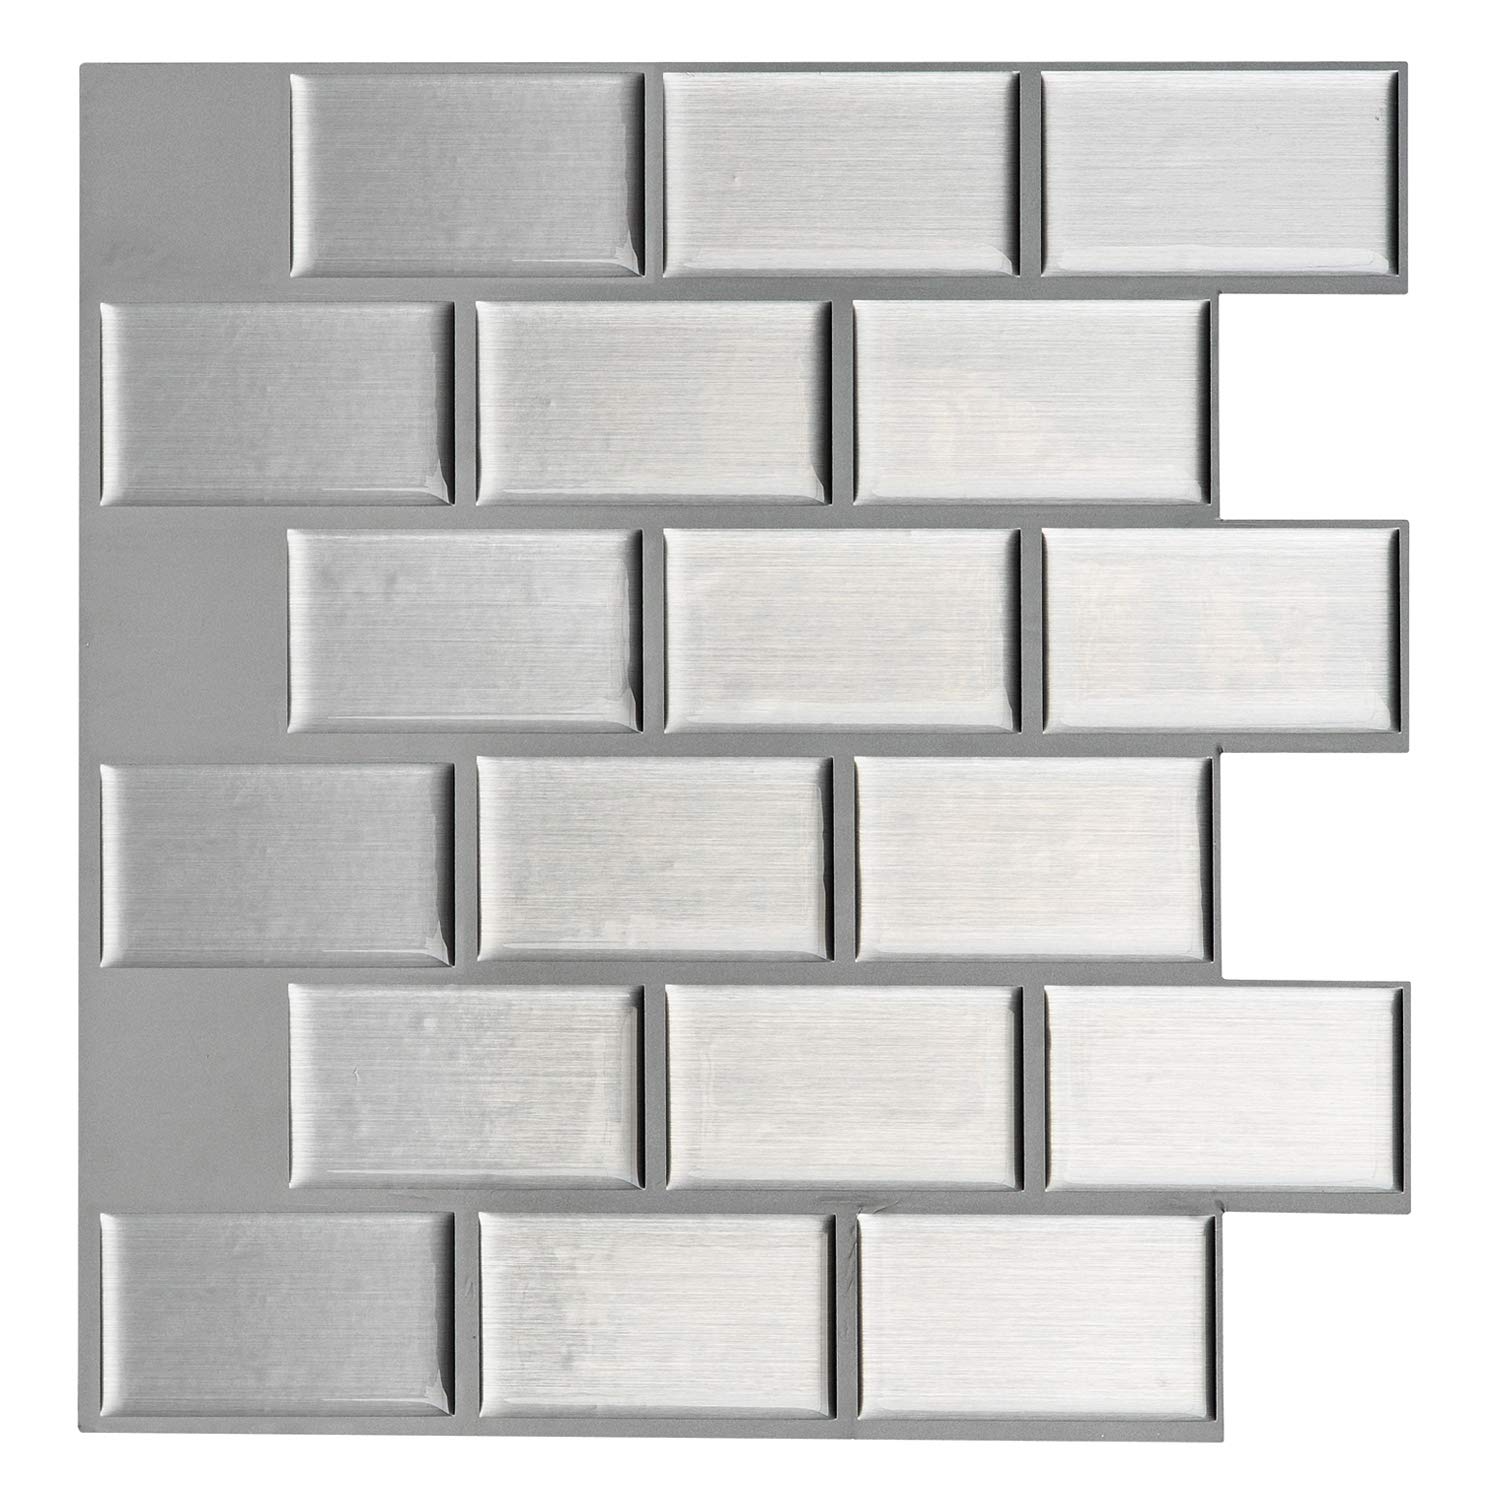 A17004 - Peel and Stick Kitchen Backsplash Wall Tiles, Silver Subway Set of 6